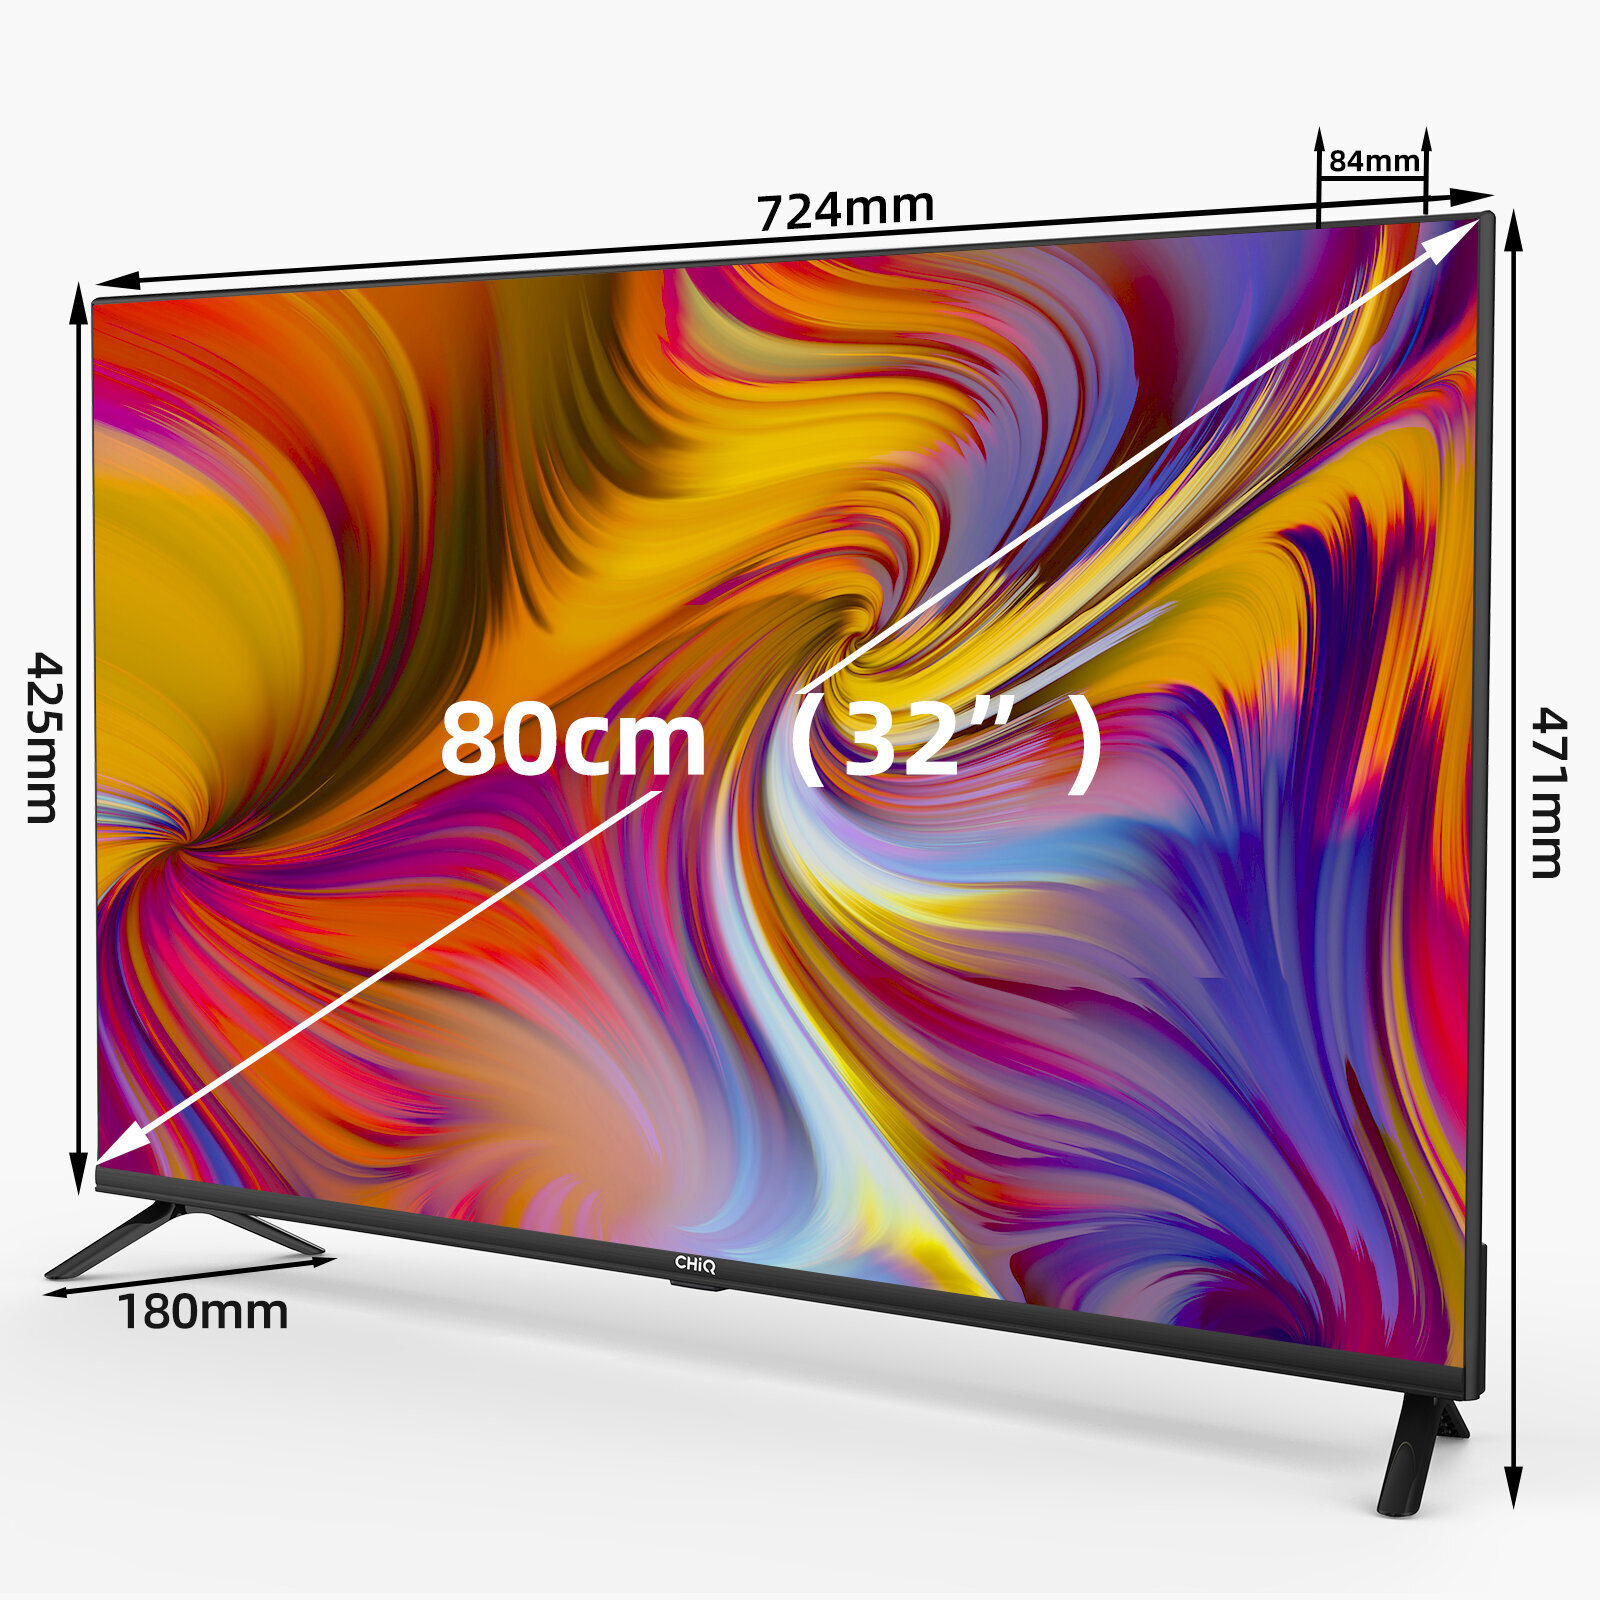 SMART cm, HD, TV) / Zoll (Flat, 32 TV, LED Google 80 L32H7G TV CHIQ